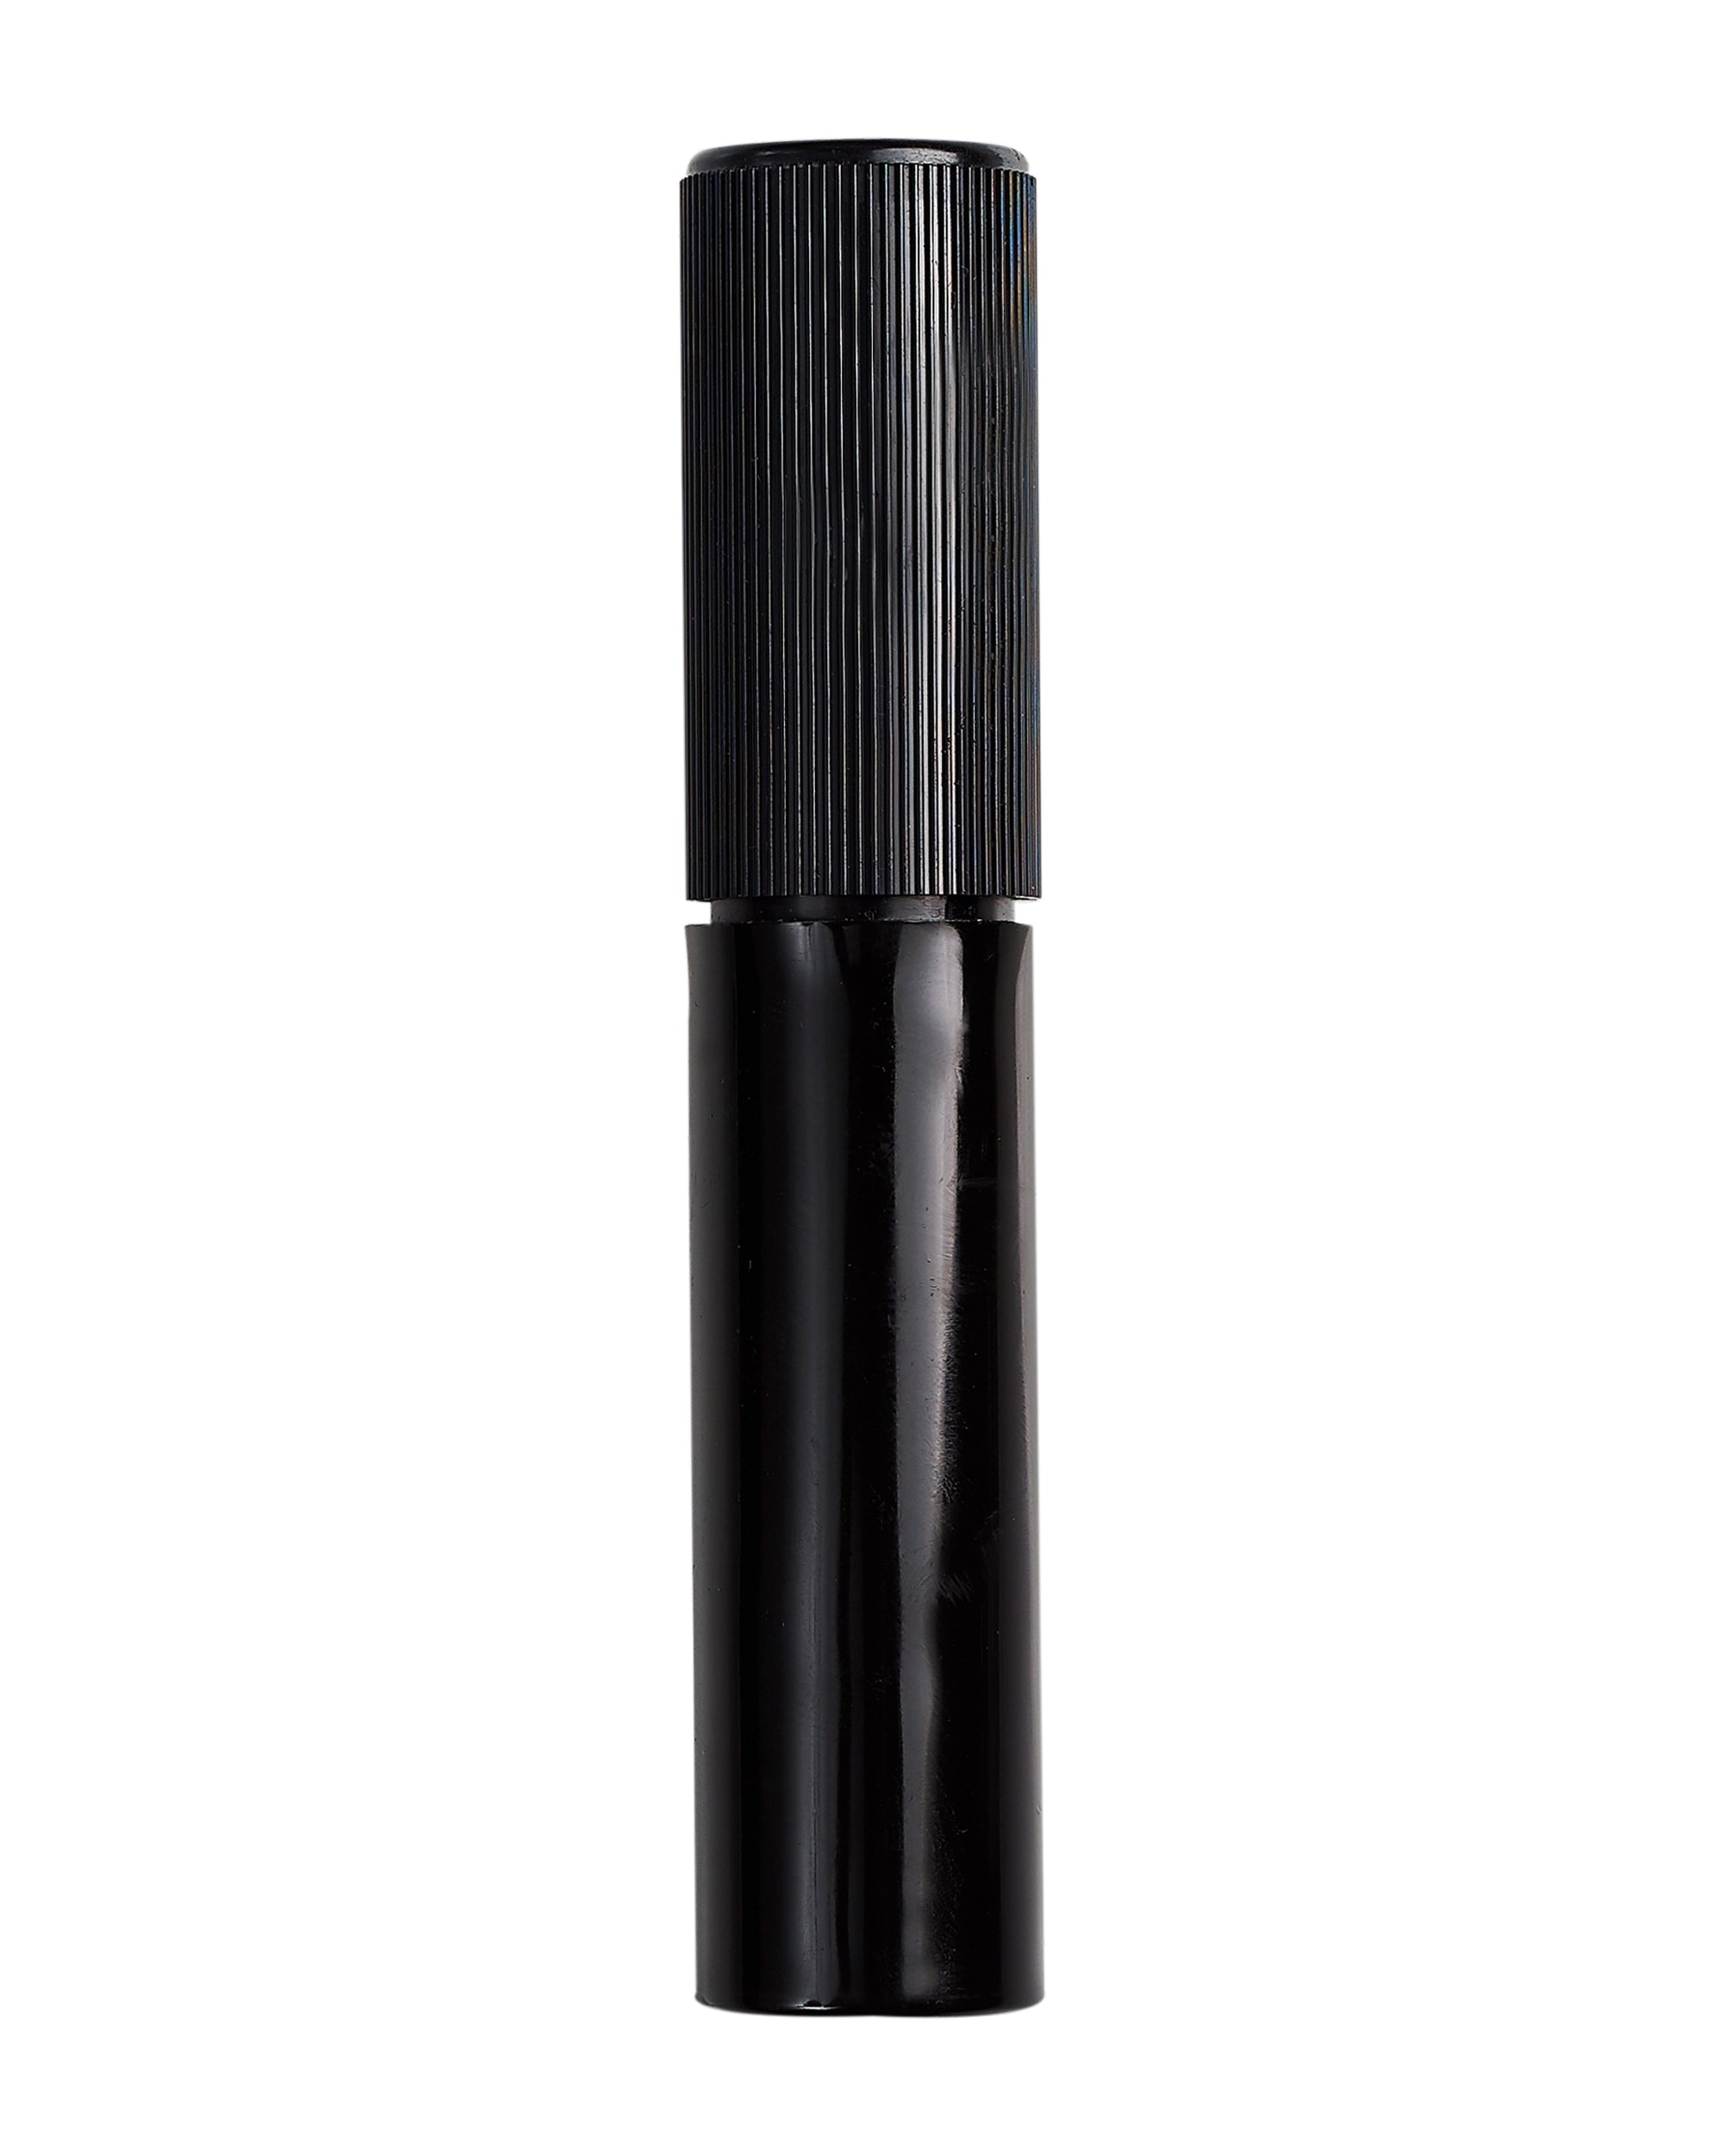 Child Resistant & Luer Lock | DymaPak Twistspenser Black Plastic Dab Applicator Syringes | 1mL - 0.33mL Increments - 3